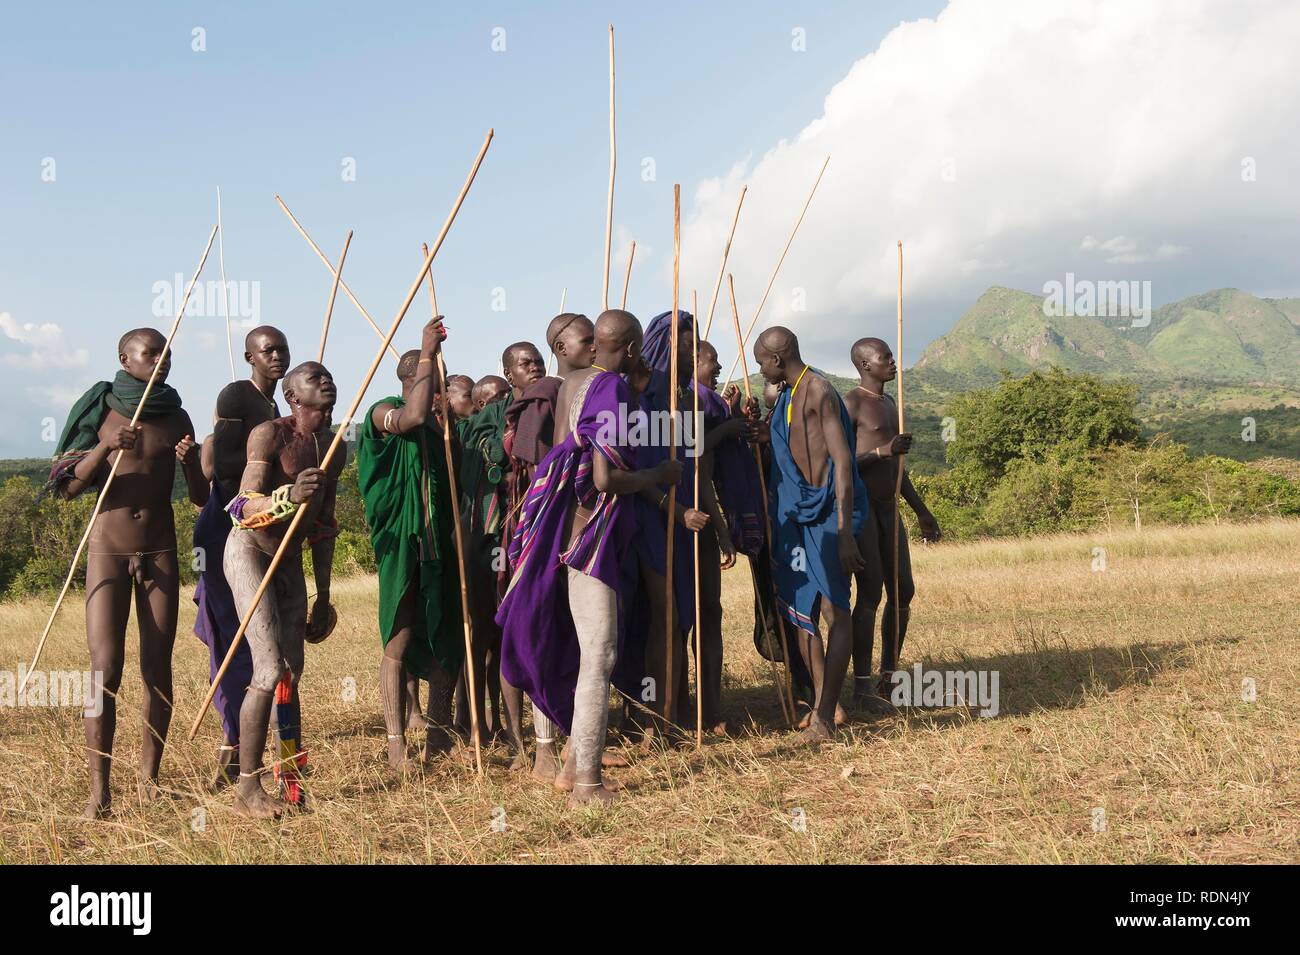 Donga stick lotta cerimonia, tribù Surma, Tulgit, Omo River Valley, Etiopia, Africa Foto Stock